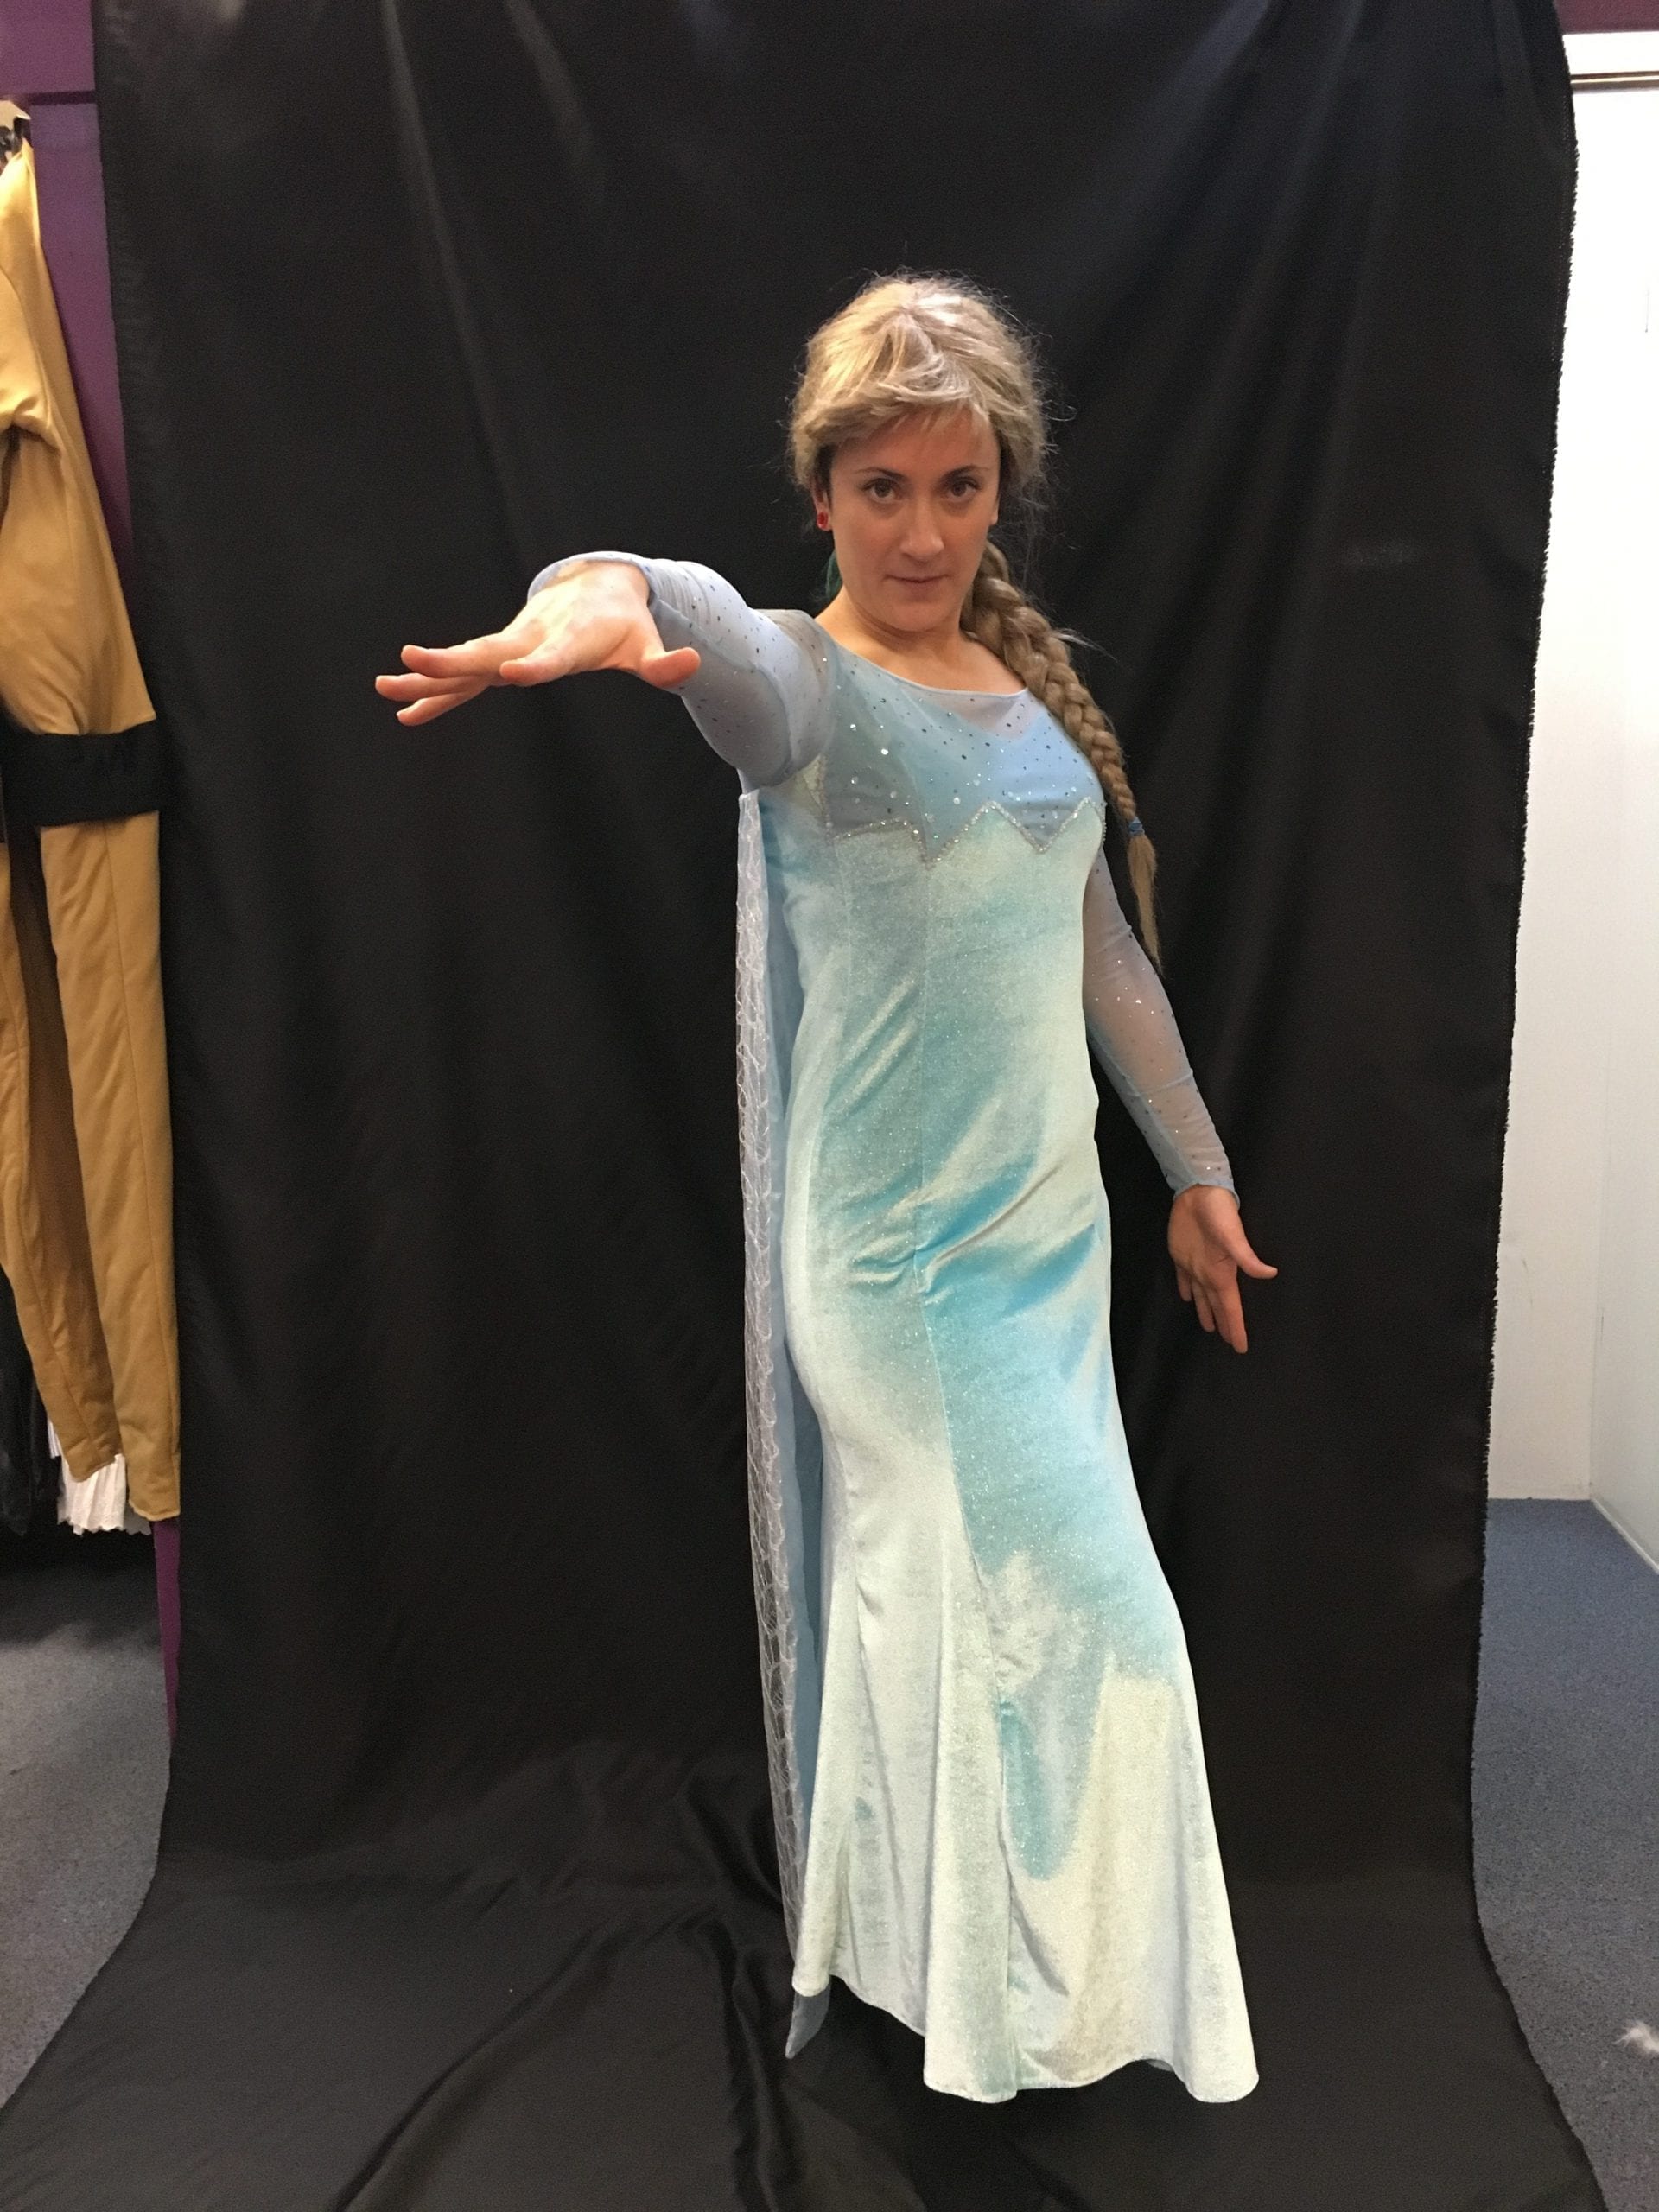 Featured image for “Elsa (Frozen)”